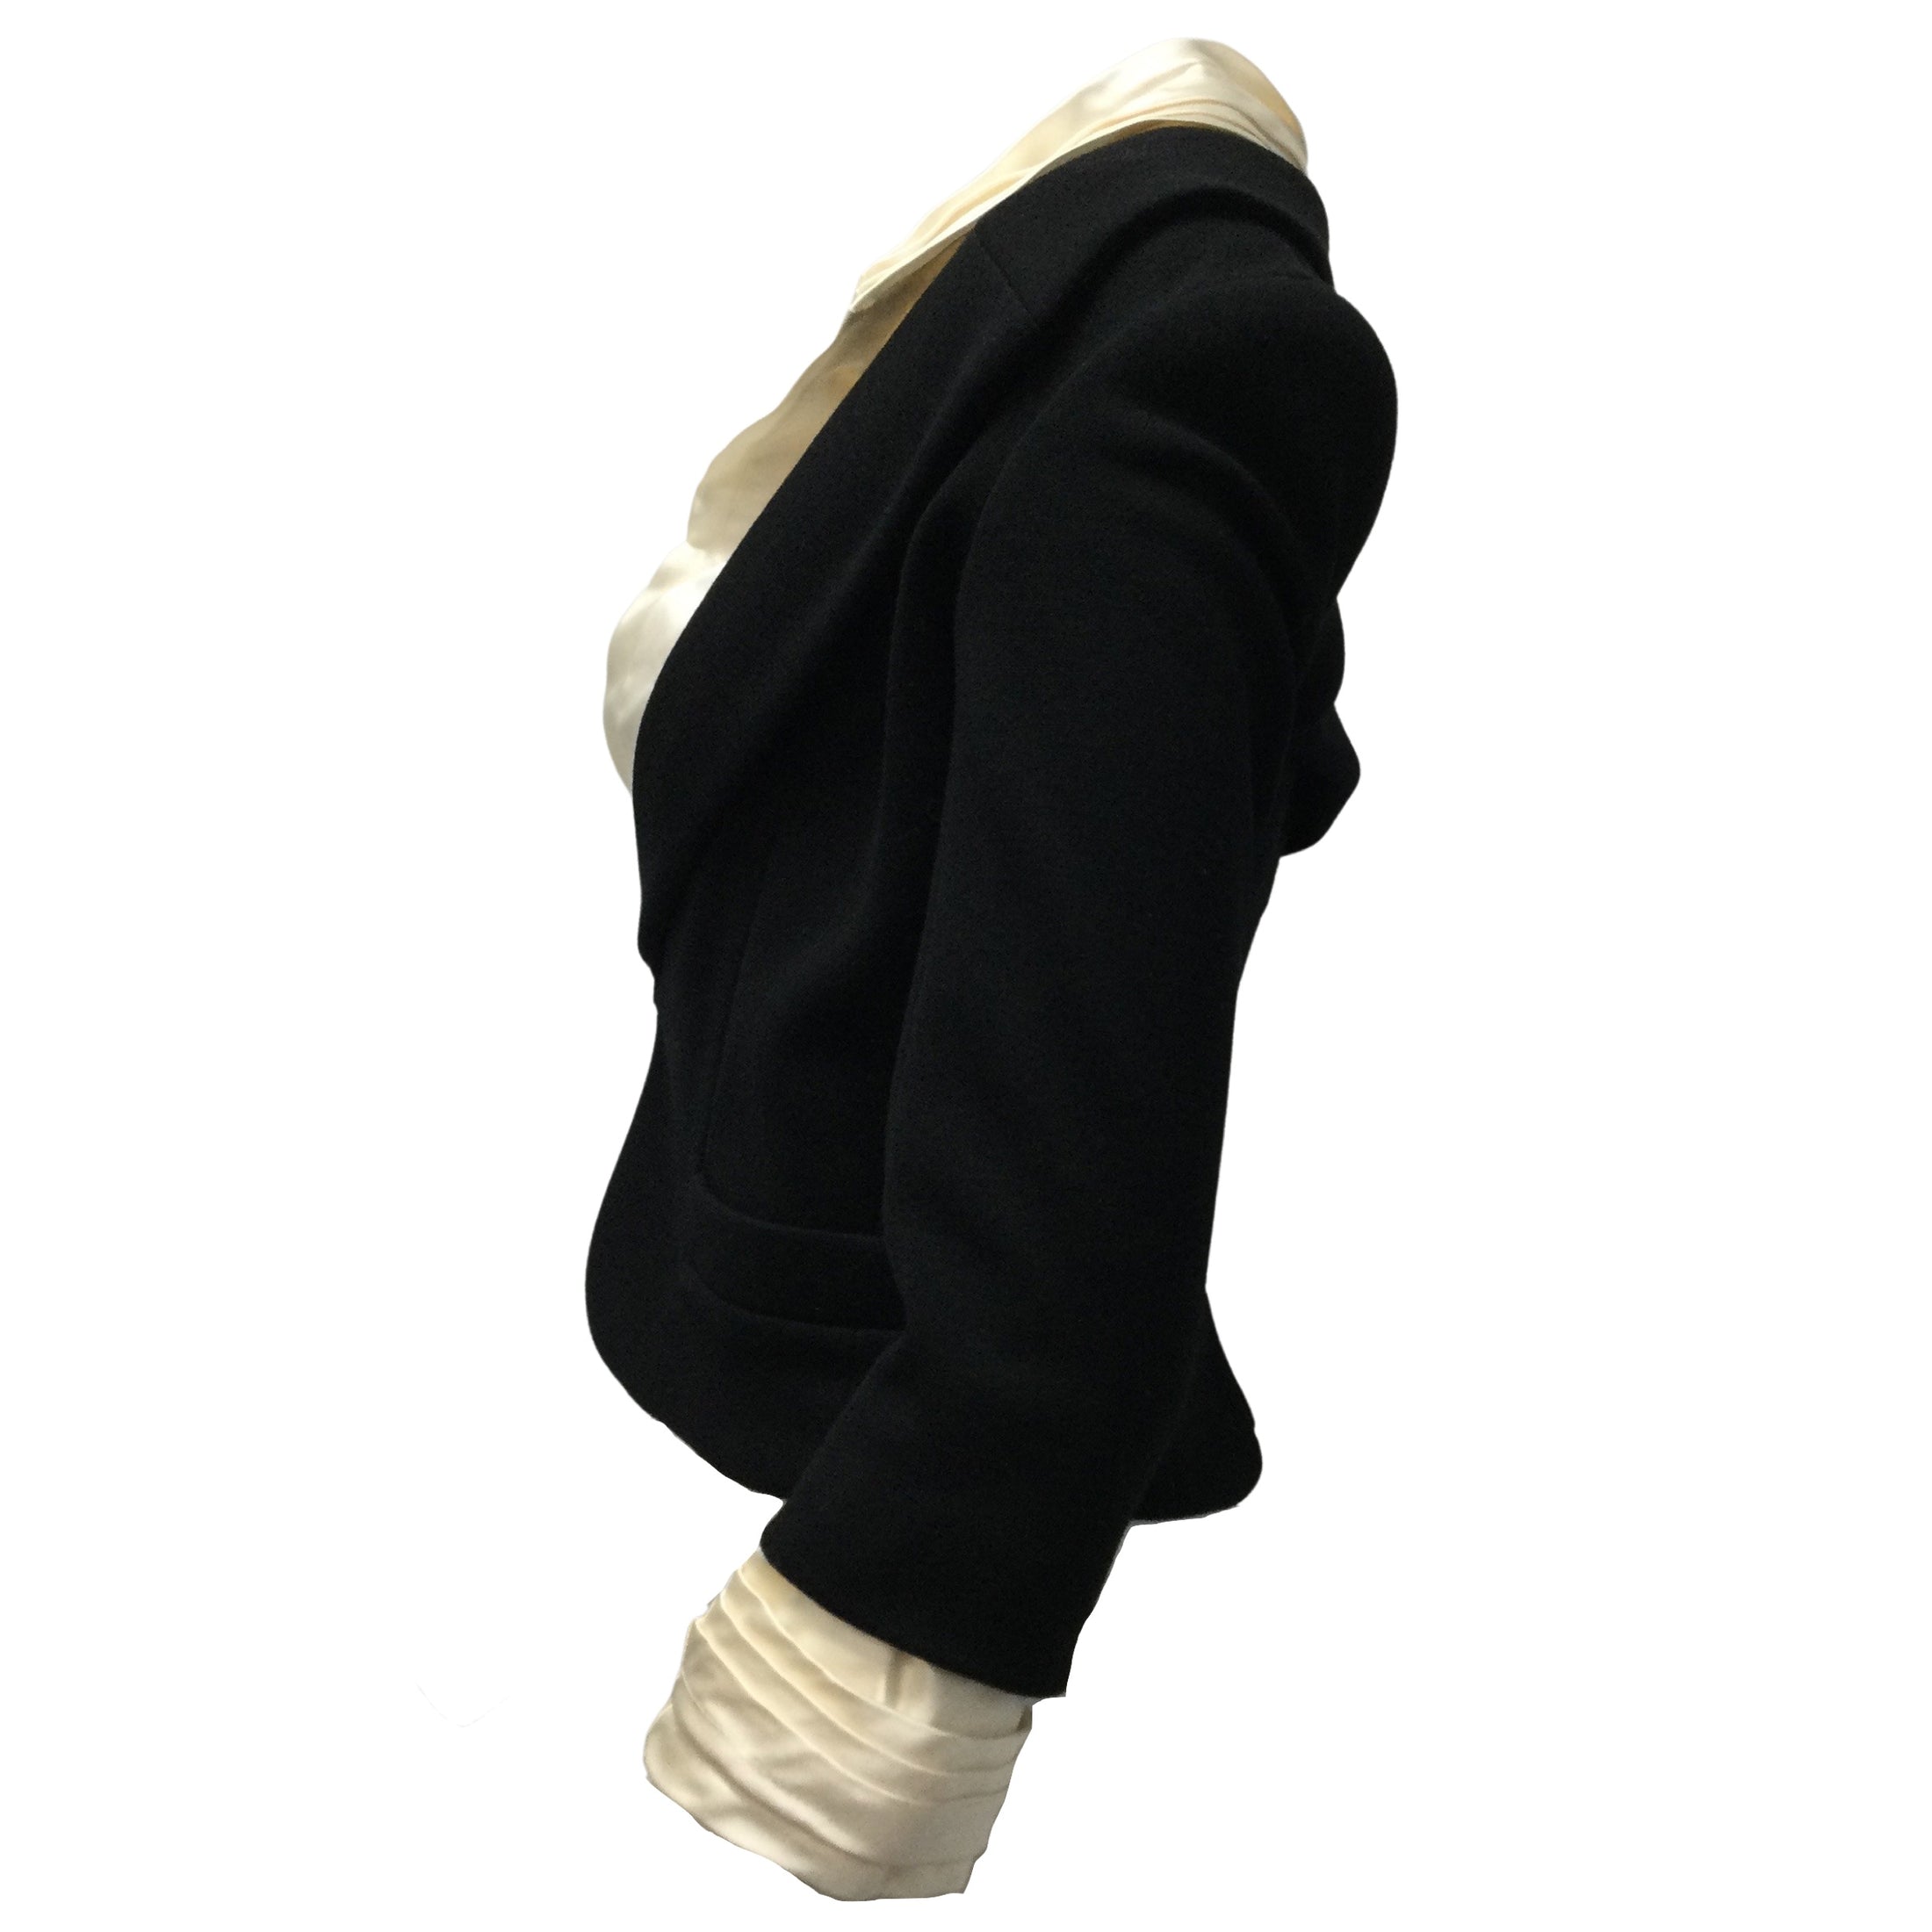 Chanel Black 2007 Cropped Wool Jacket